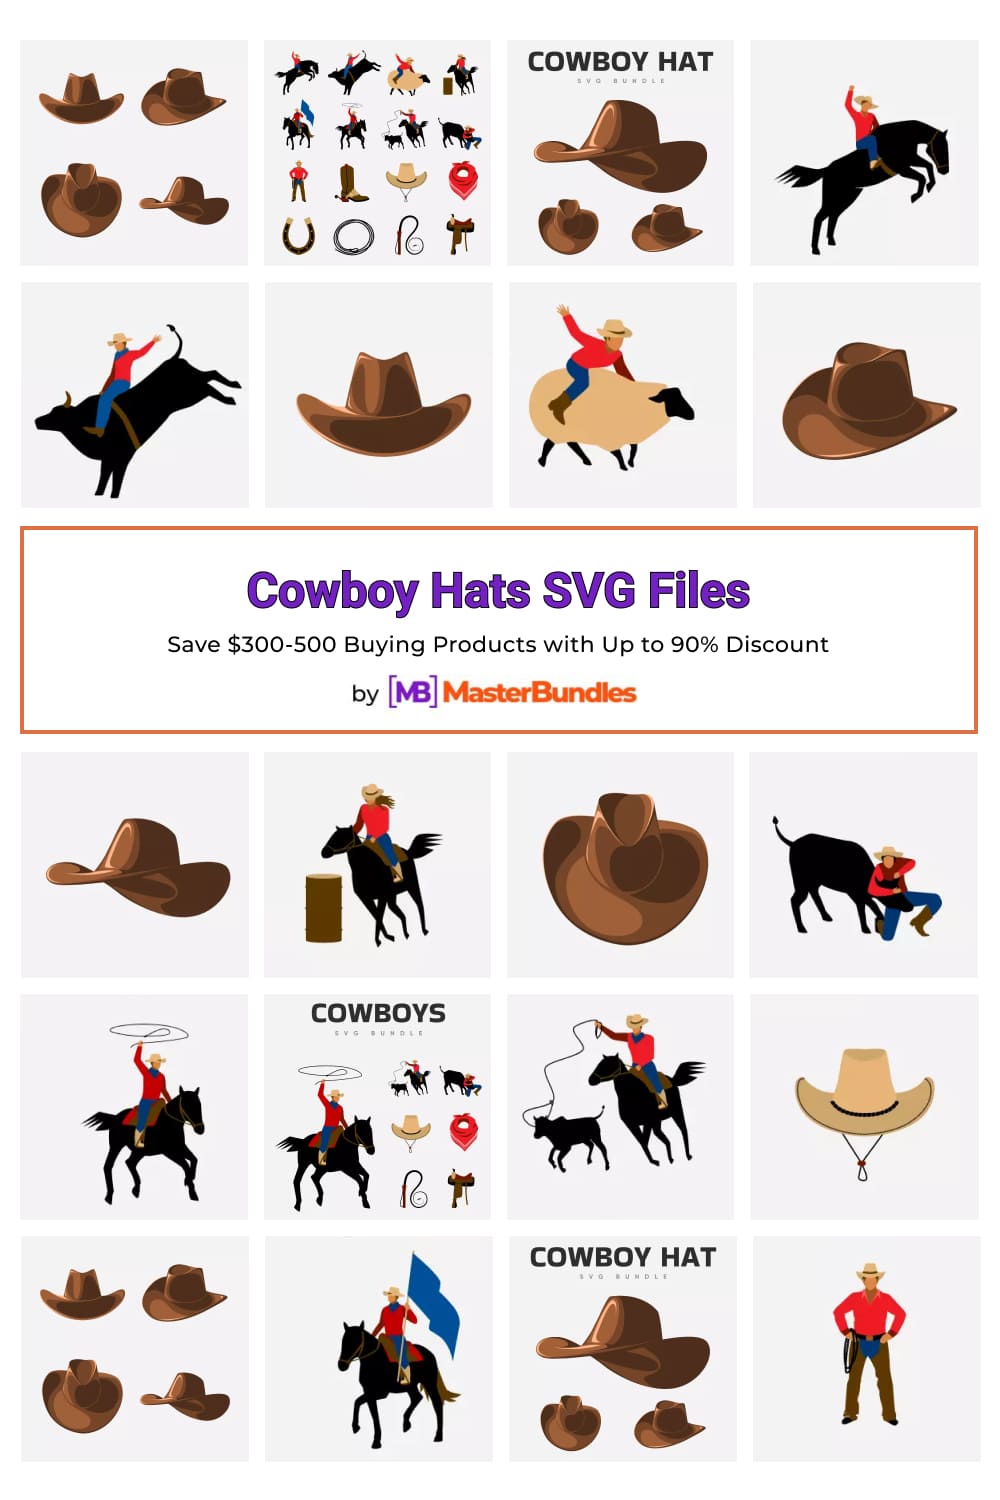 Cowboy Hats SVG Files Pinterest image.